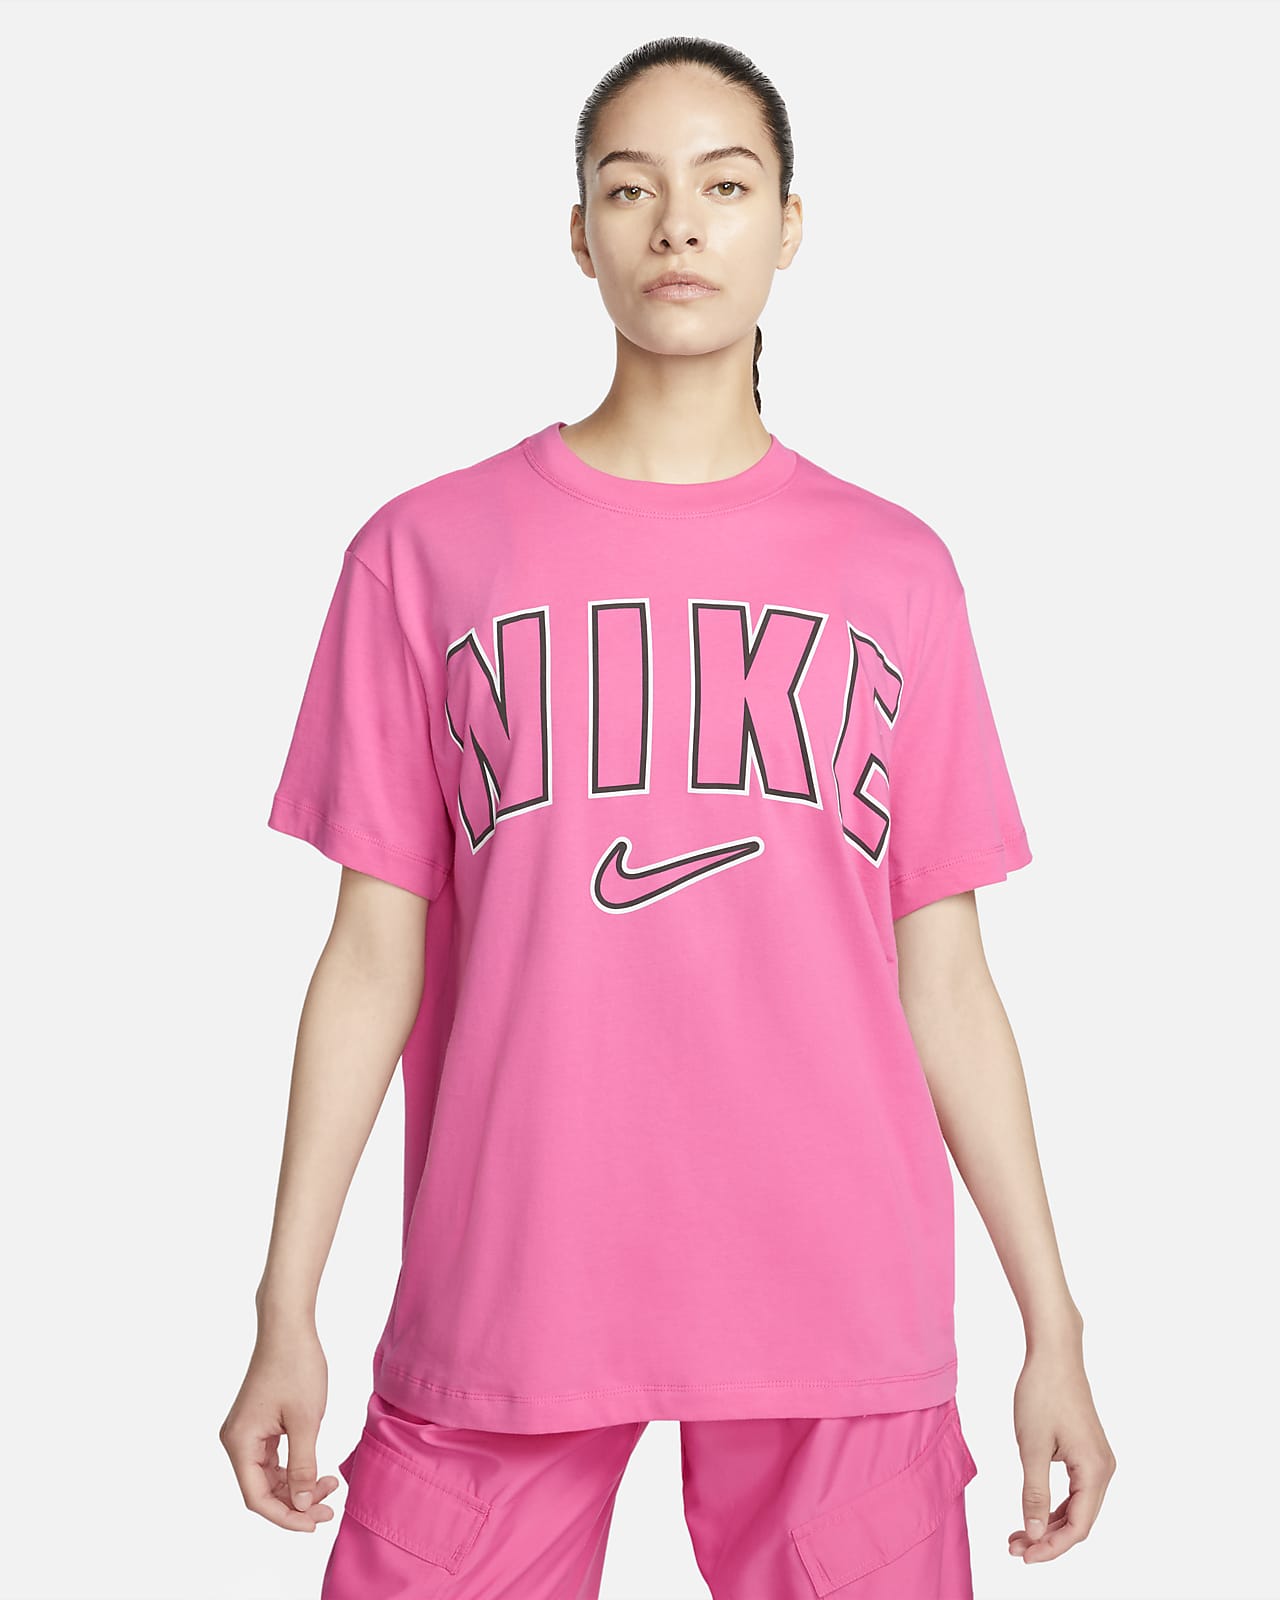 Nike Sportswear Women's T-Shirt. LU